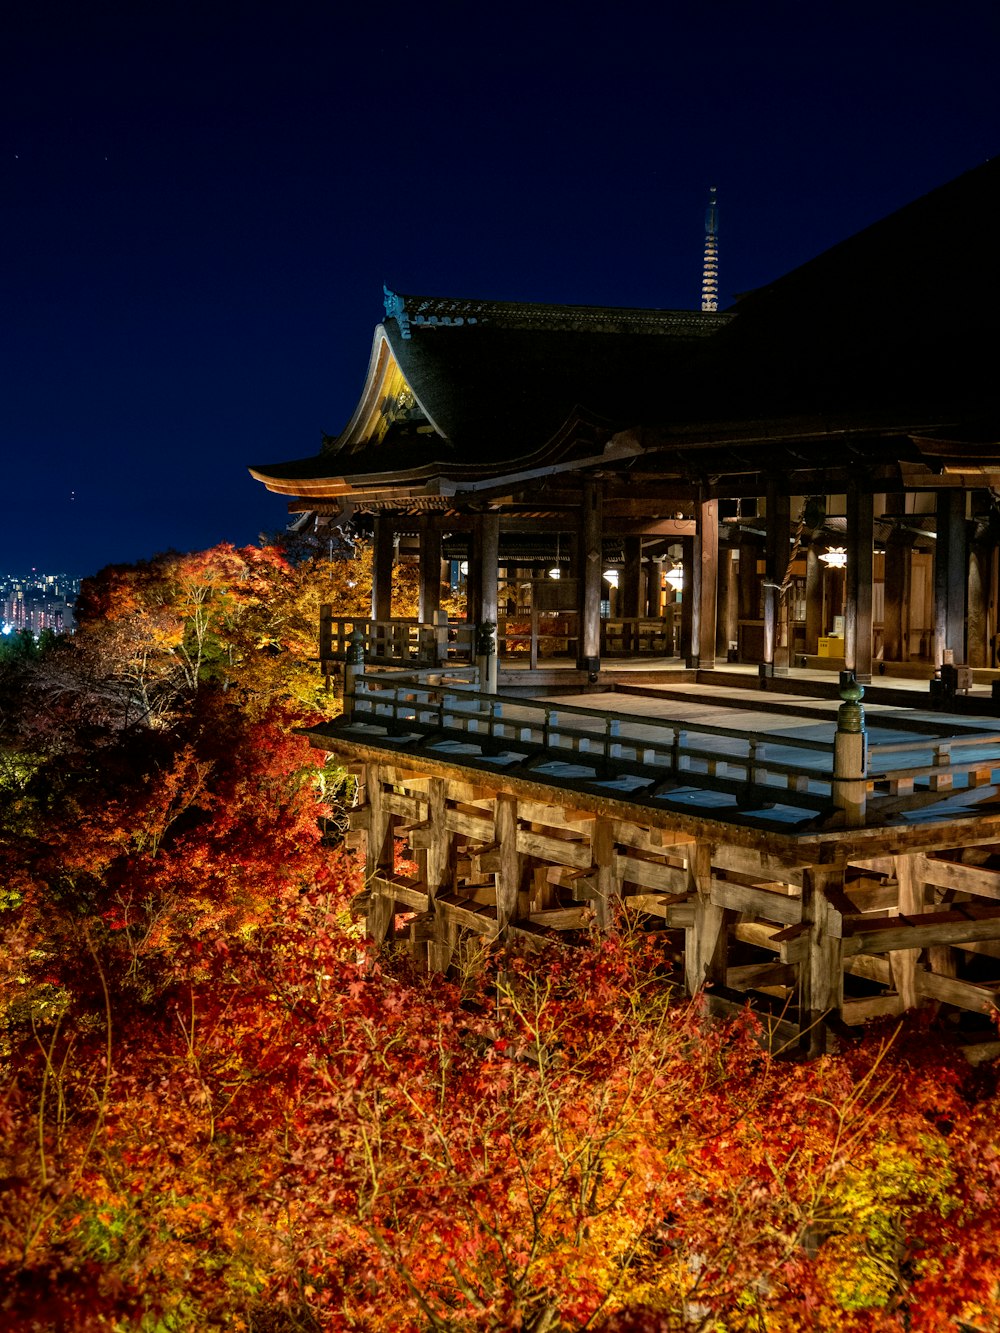 Kiyomizu-dera with a pool and trees around it